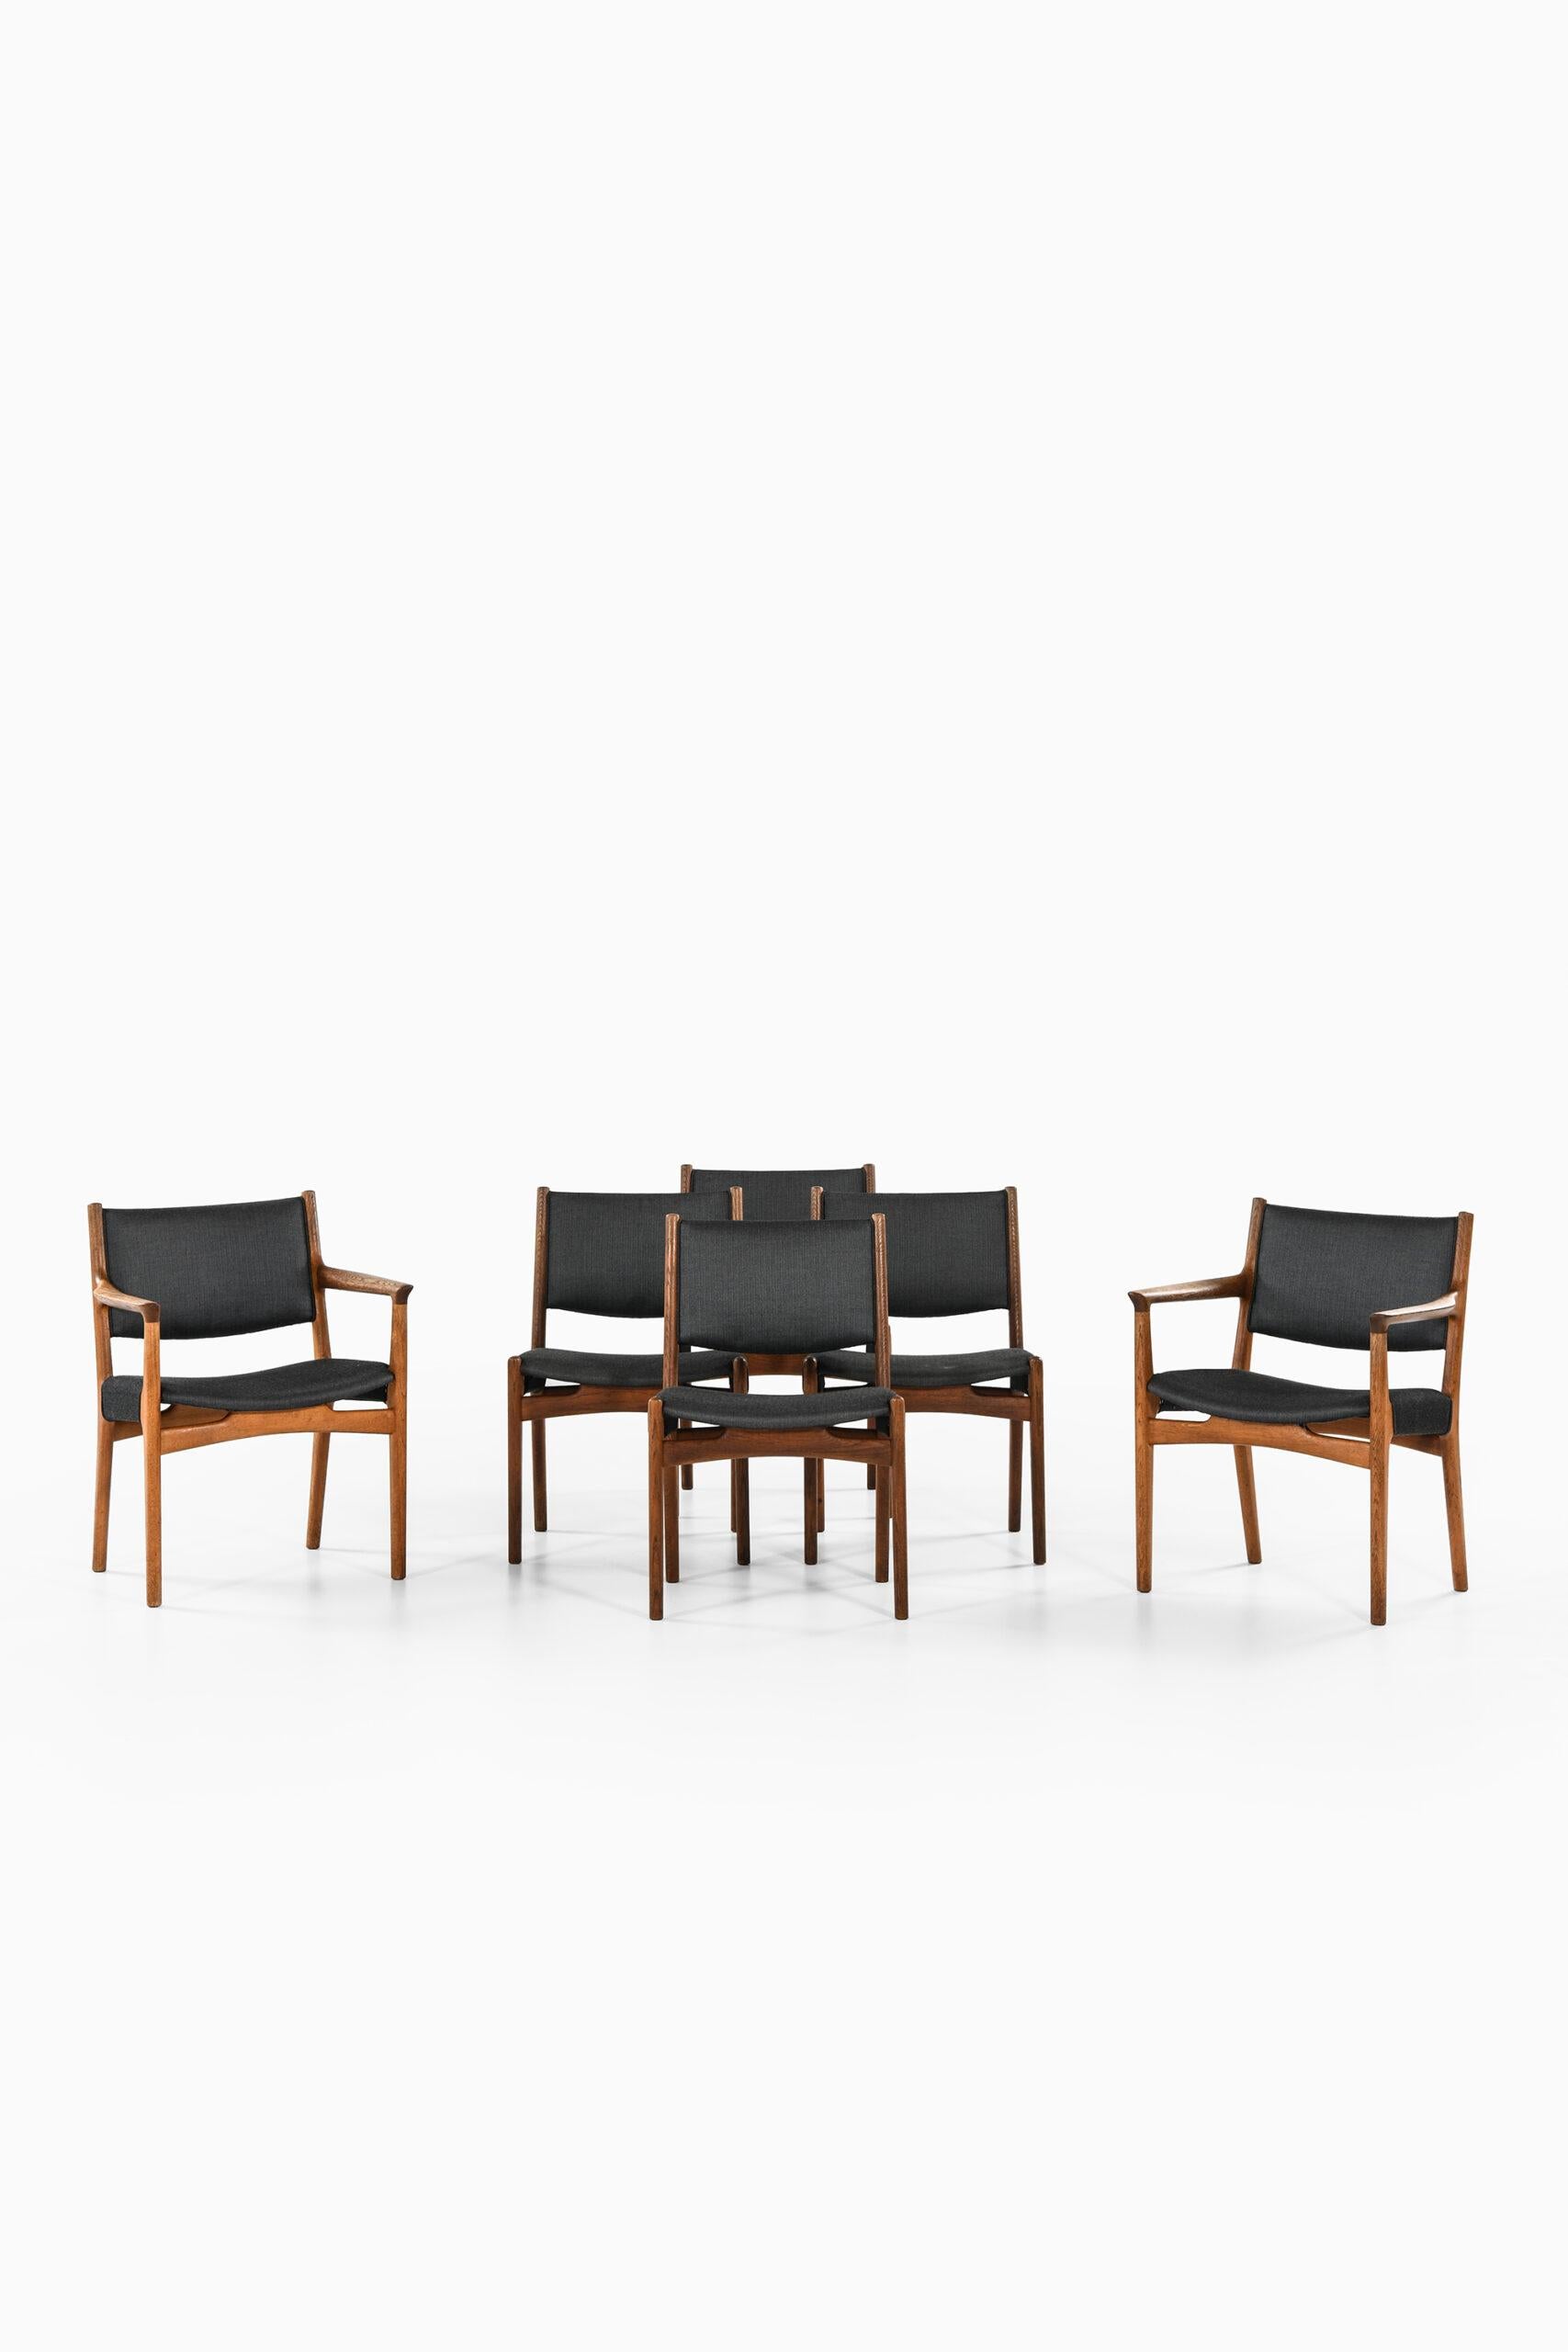 Mid-20th Century Hans Wegner Dining Chairs by Cabinetmaker Johannes Hansen in Denmark For Sale